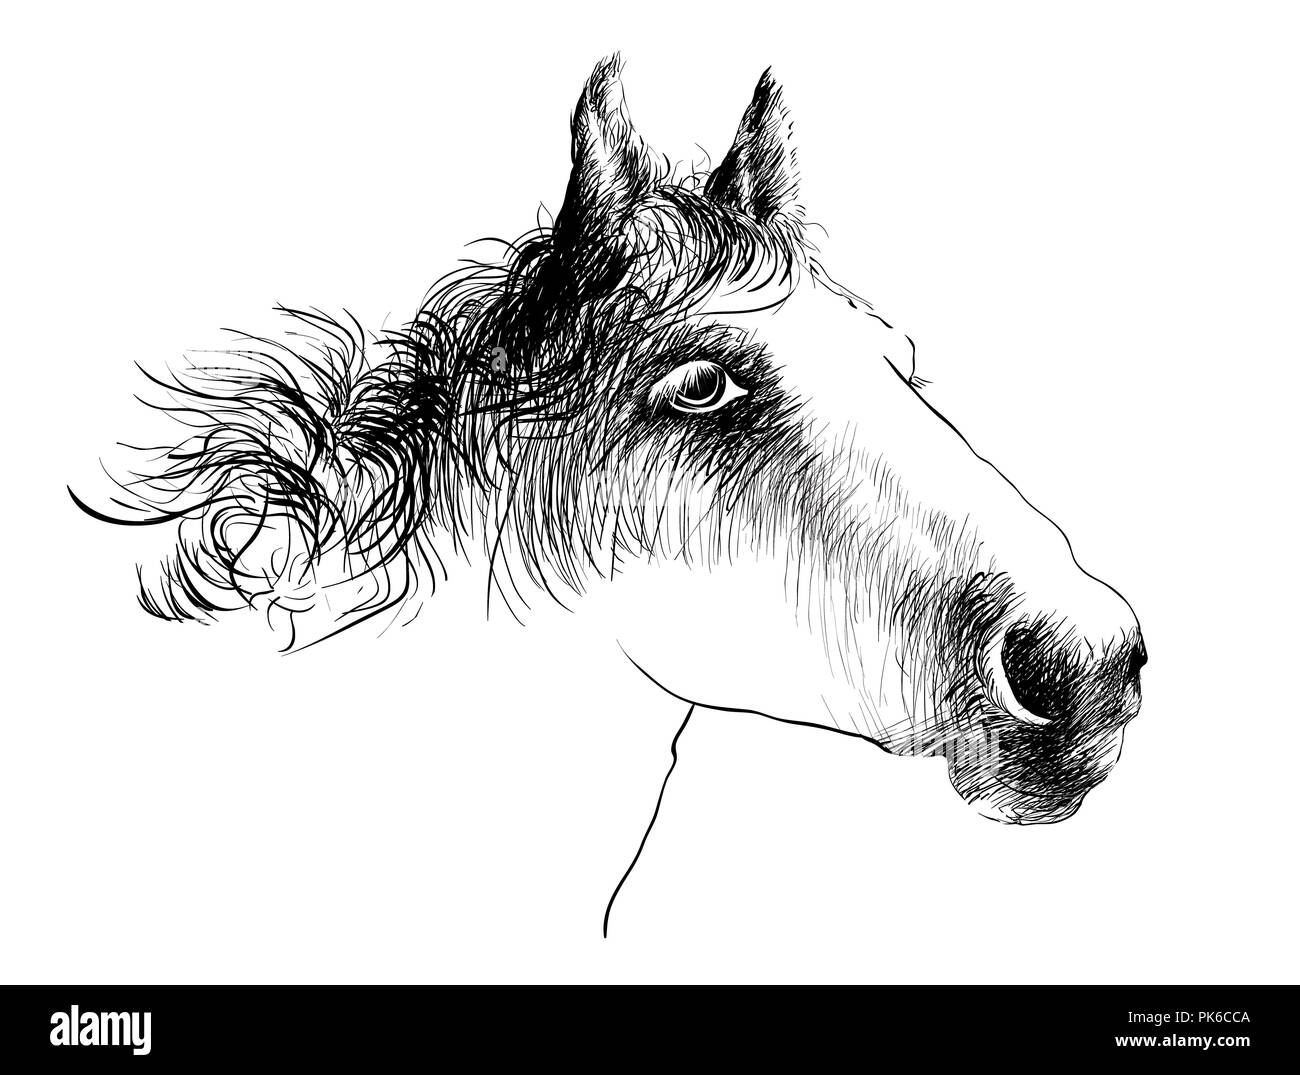 Horse head portrait illustration, drawing, engraving, ink, line art Stock Photo